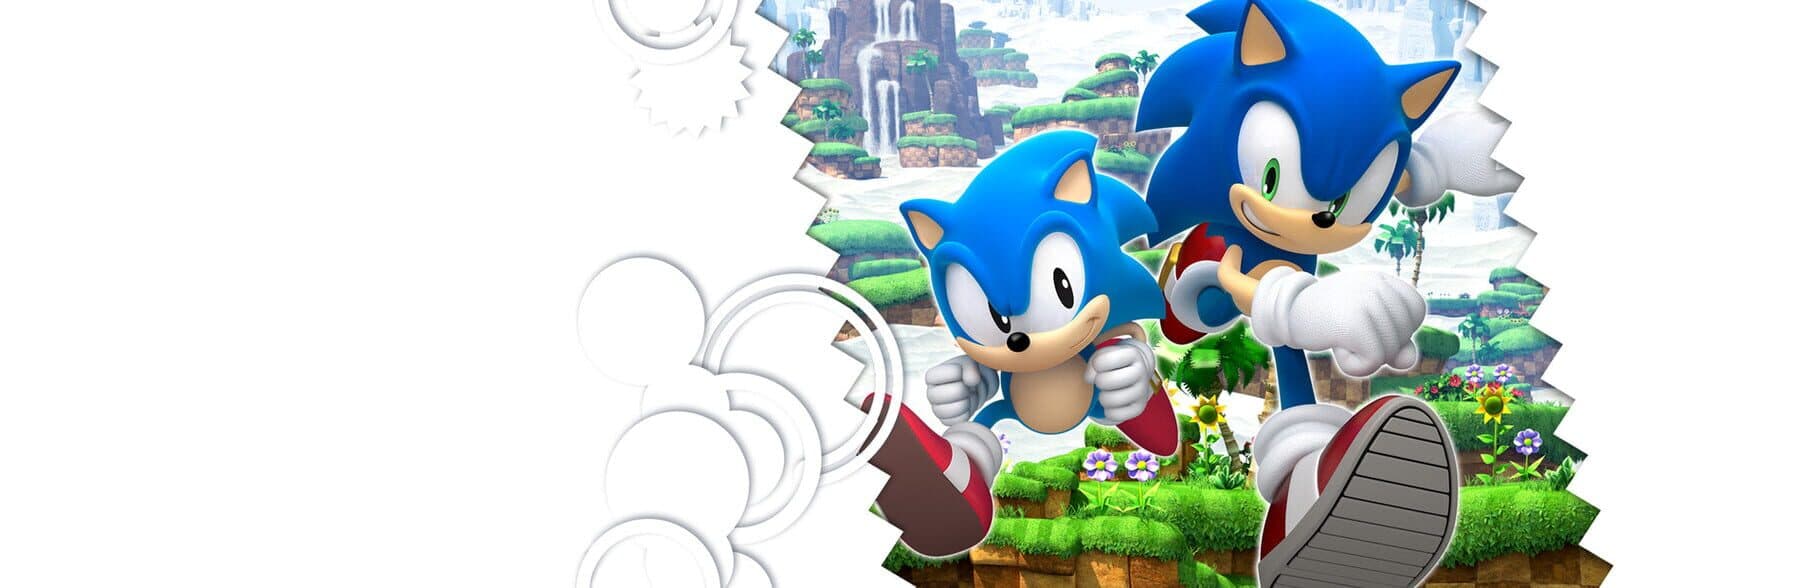 Sonic Generations Image